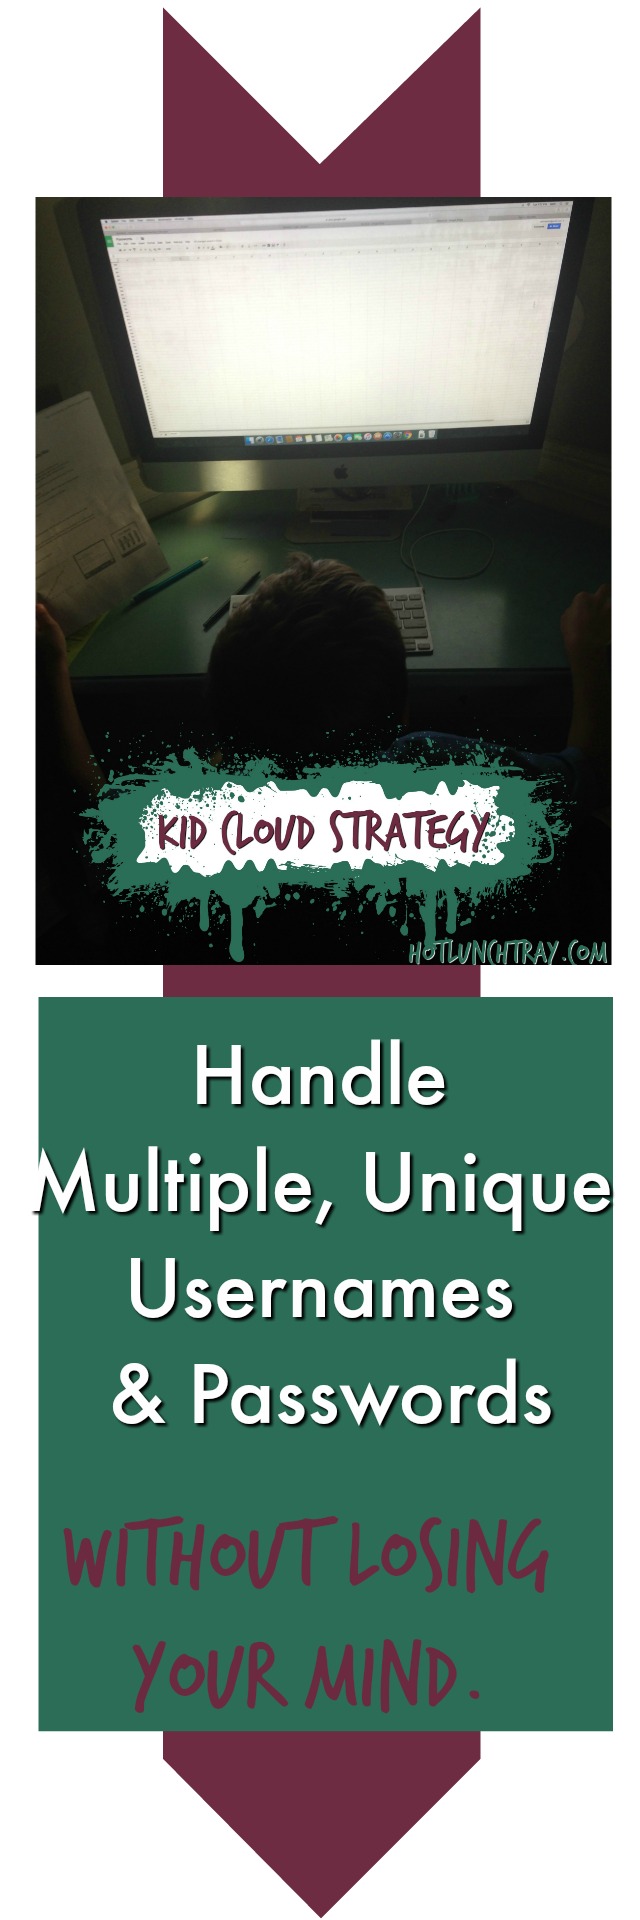 Kid Cloud Strategy PINTEREST